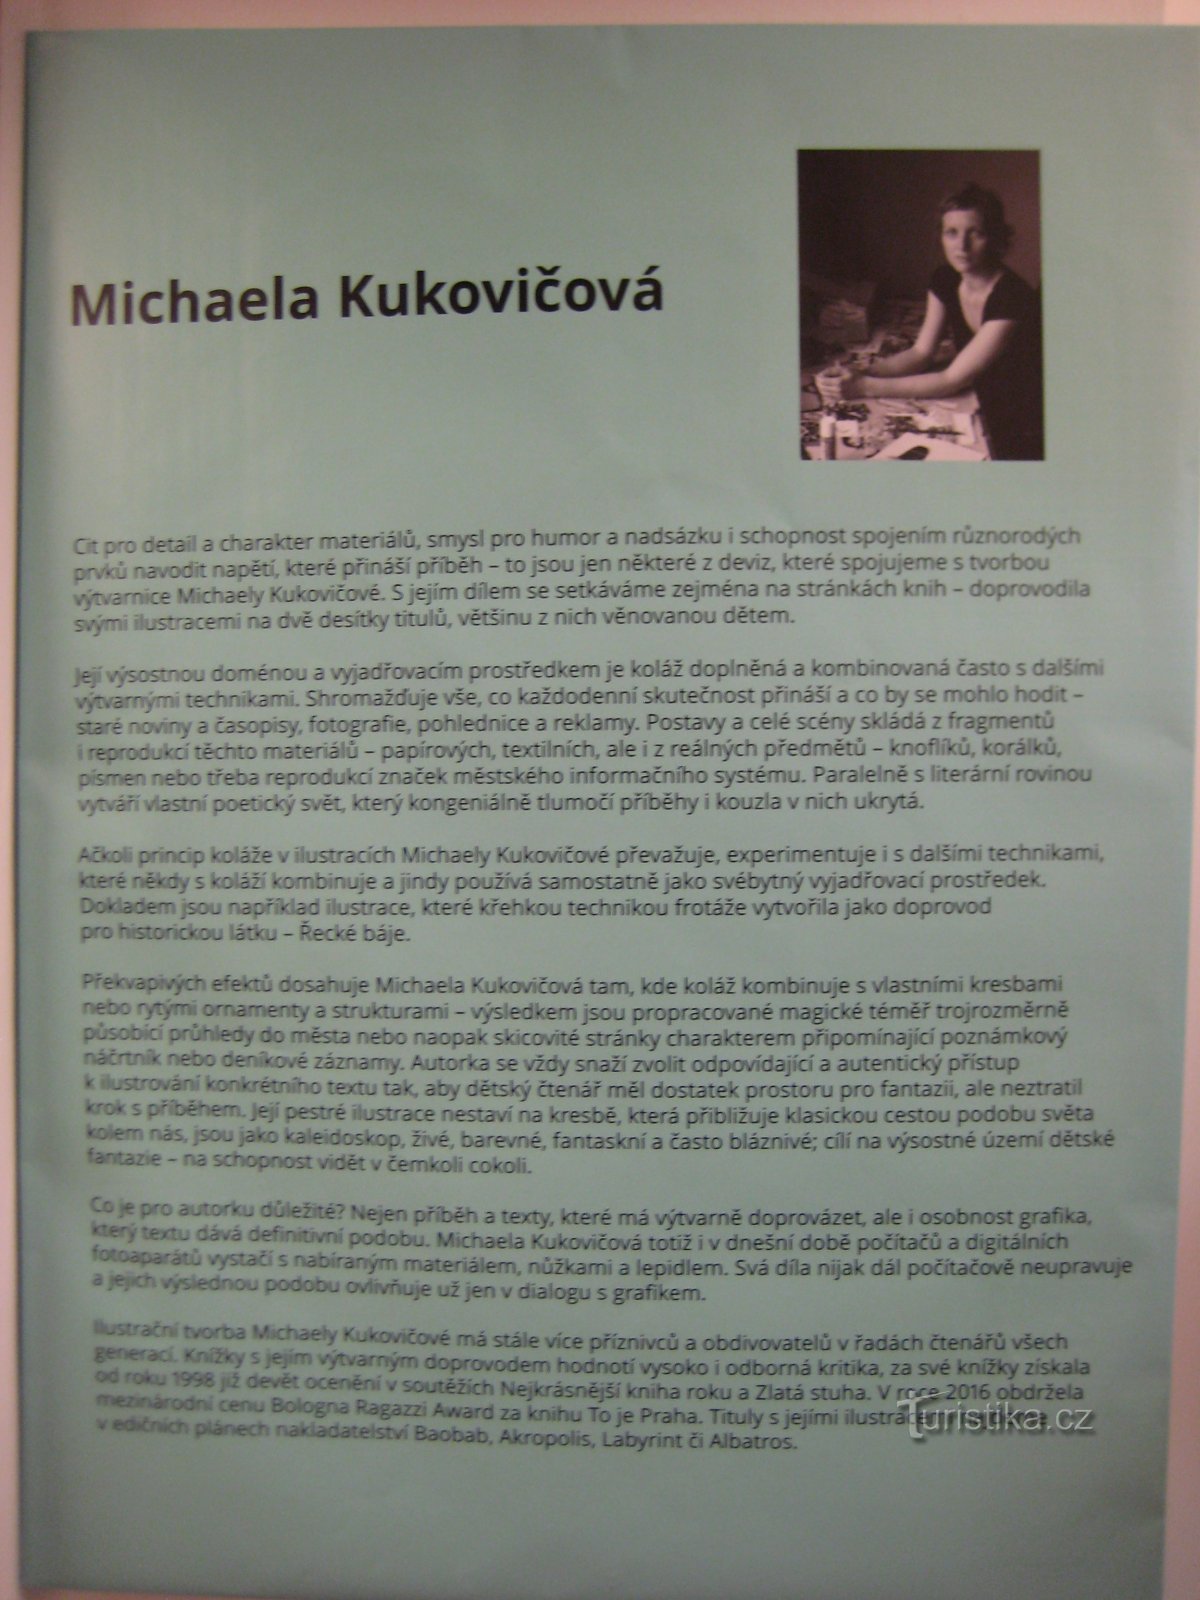 Wystawa Michaela Kukovičová - Bubluch, Duchnous i inni - Elbow